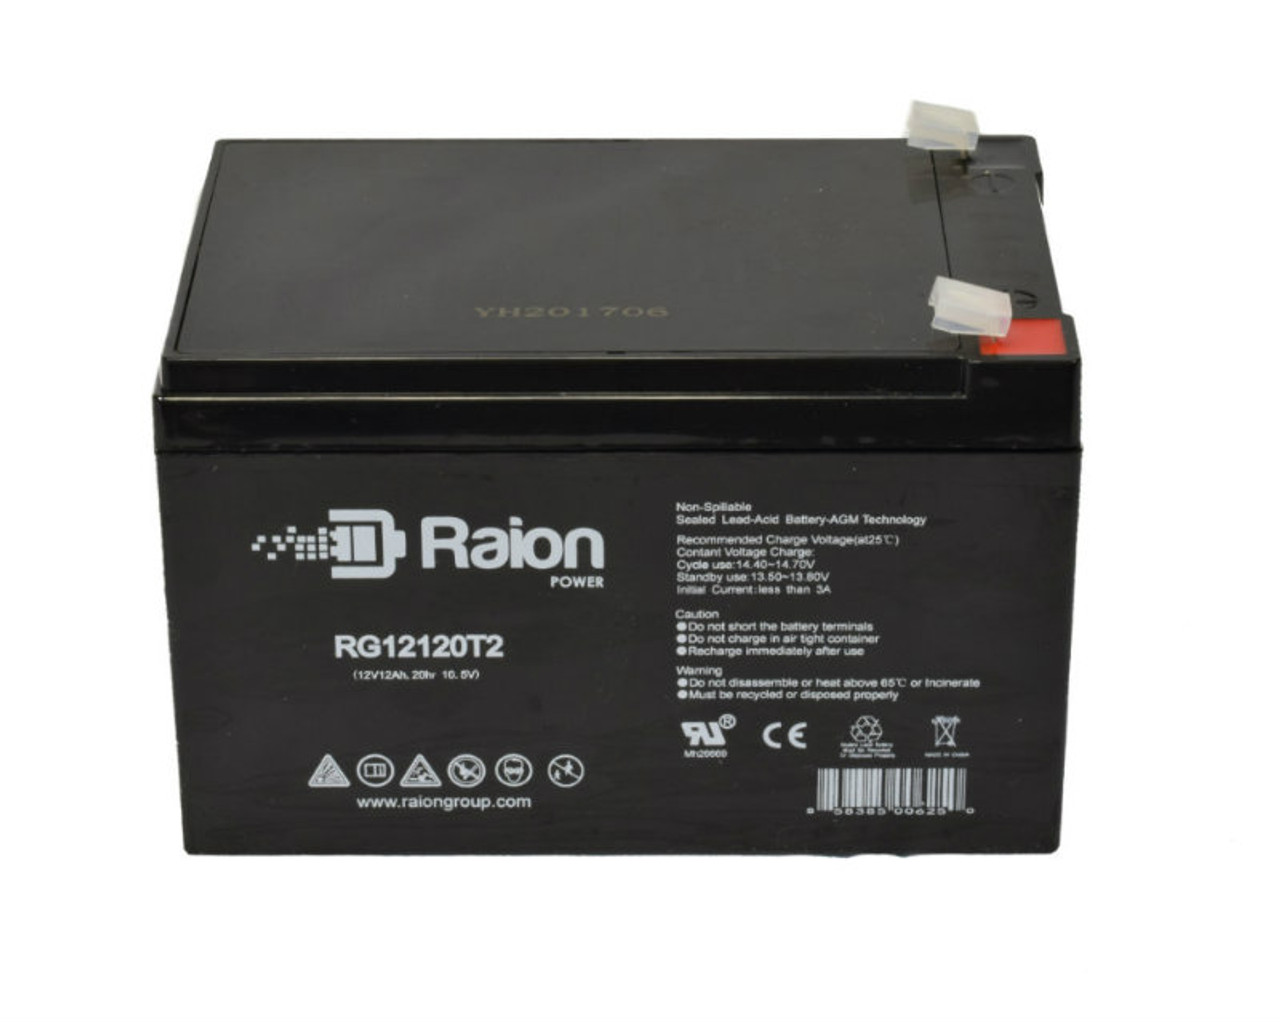 Raion Power RG12120T2 SLA Battery for Universal BU12120